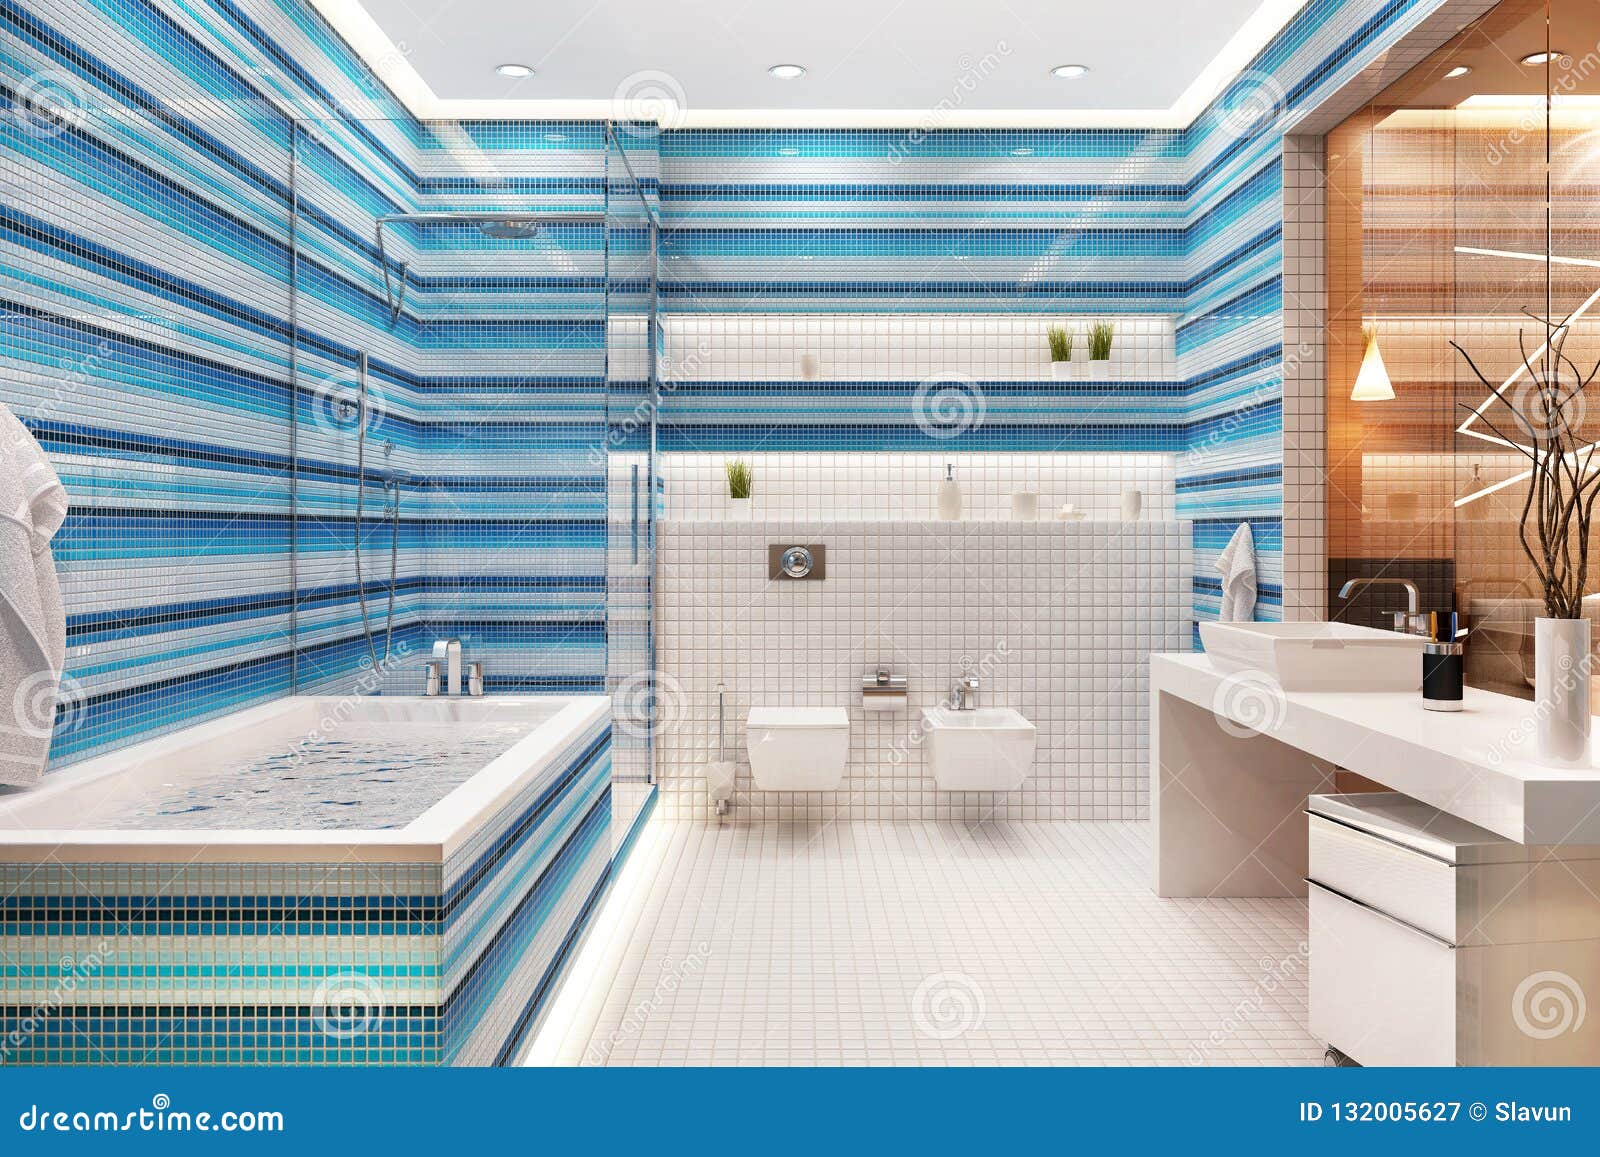 Modern Mosaic Beautiful Bathroom Design Stock Image Image Of